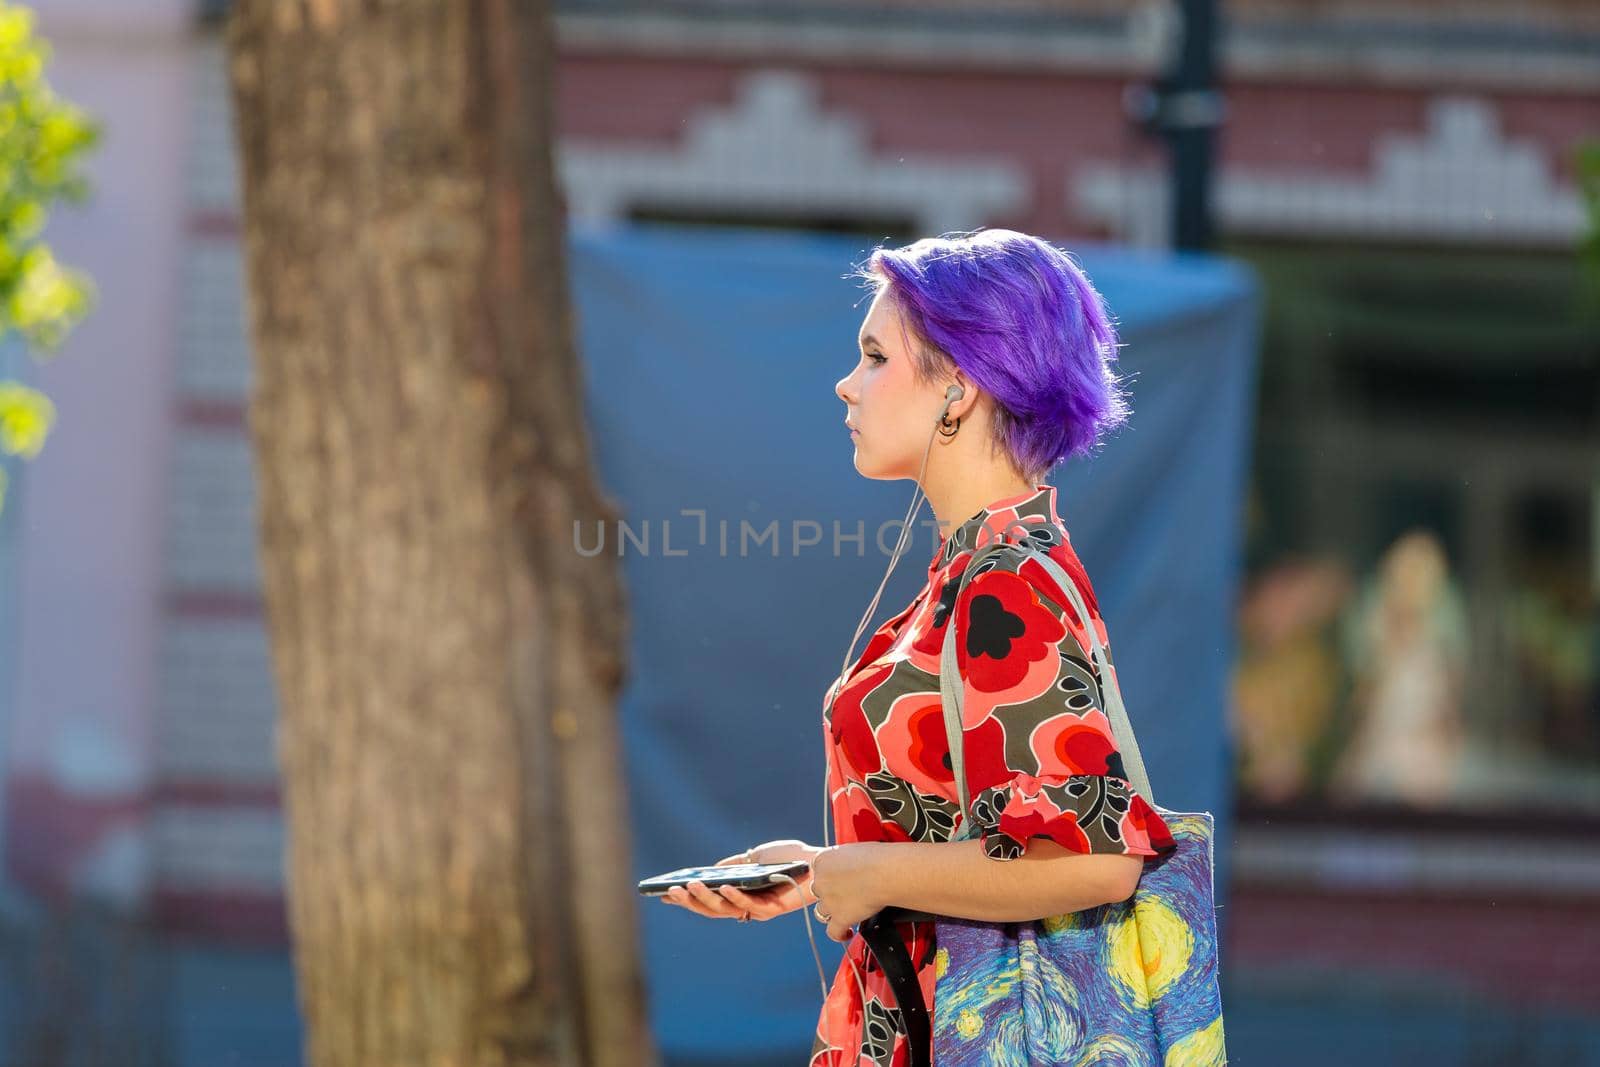 A girl walks along a city street with purple hair. Listens to music through headphones on the phone